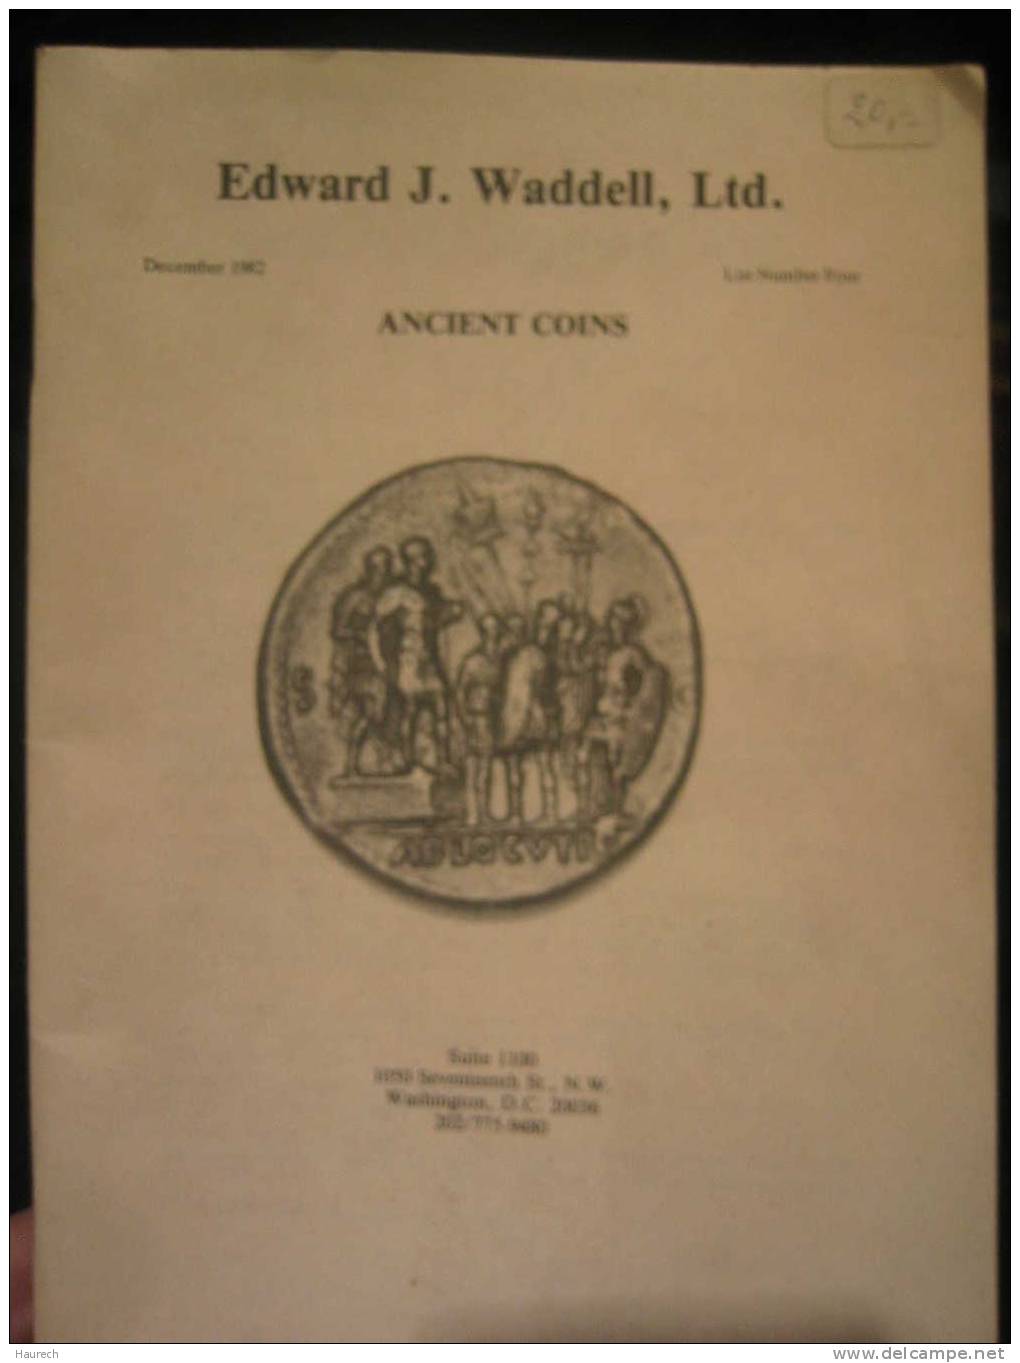 Ancient Coins, Edward J. Waddell, Décembre 1982 - Books & Software